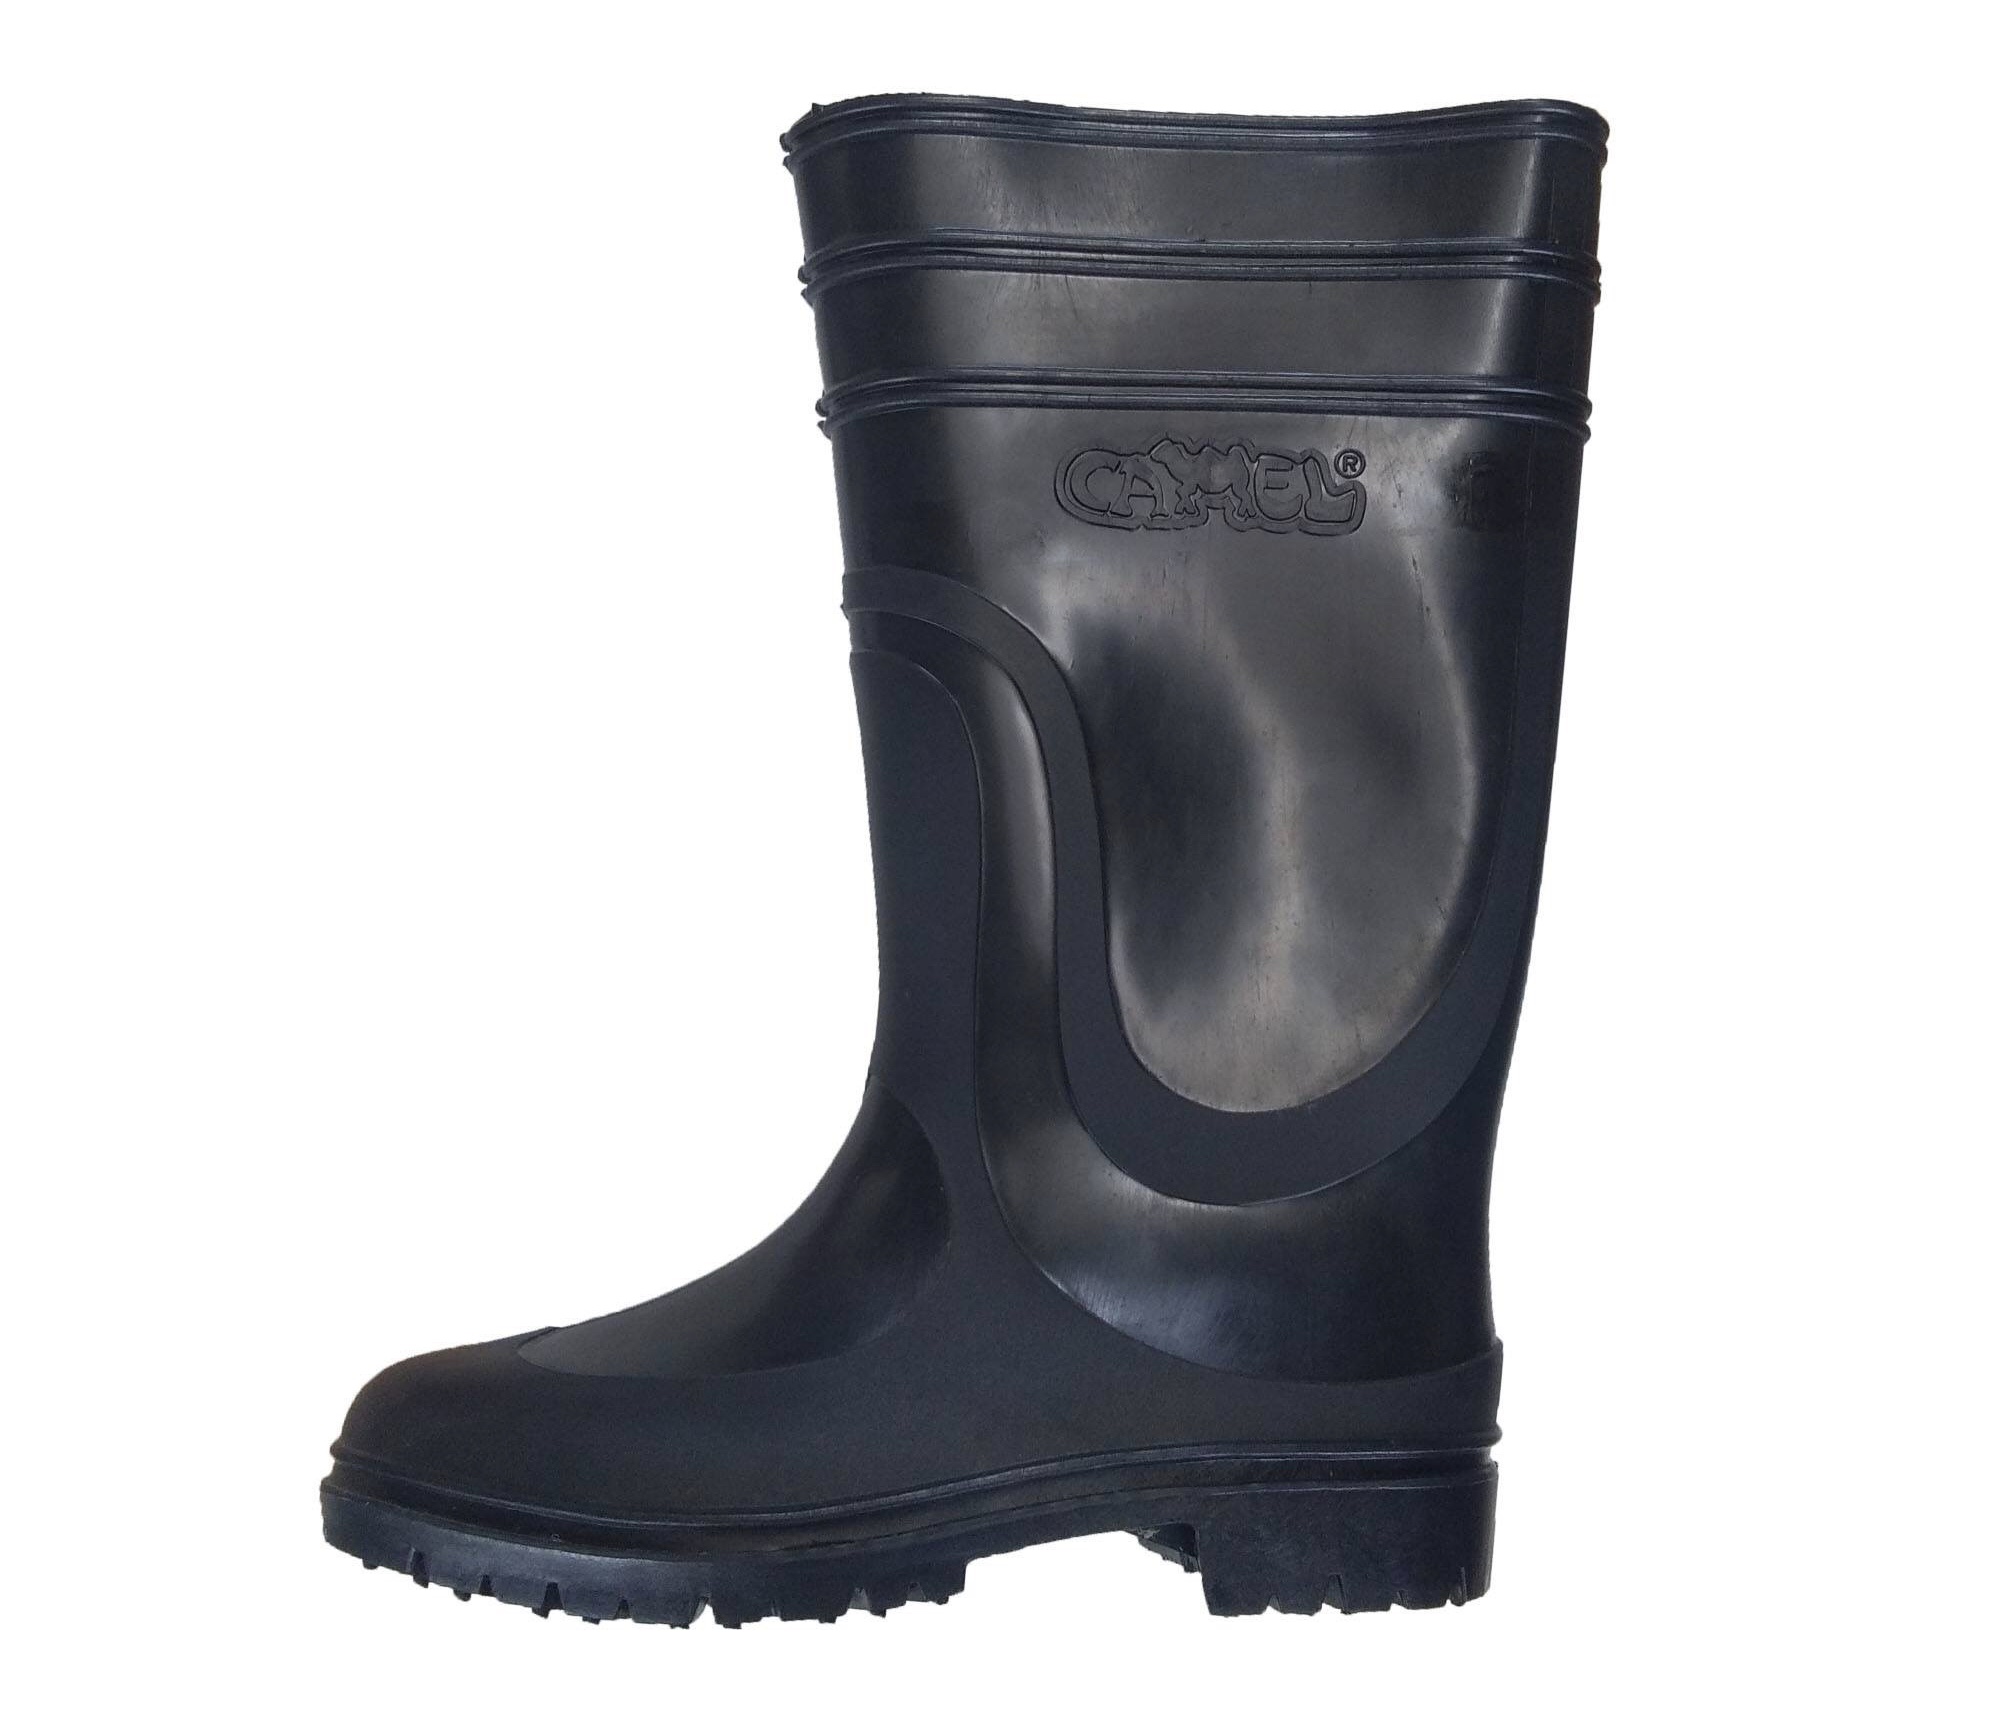 rubber boots online